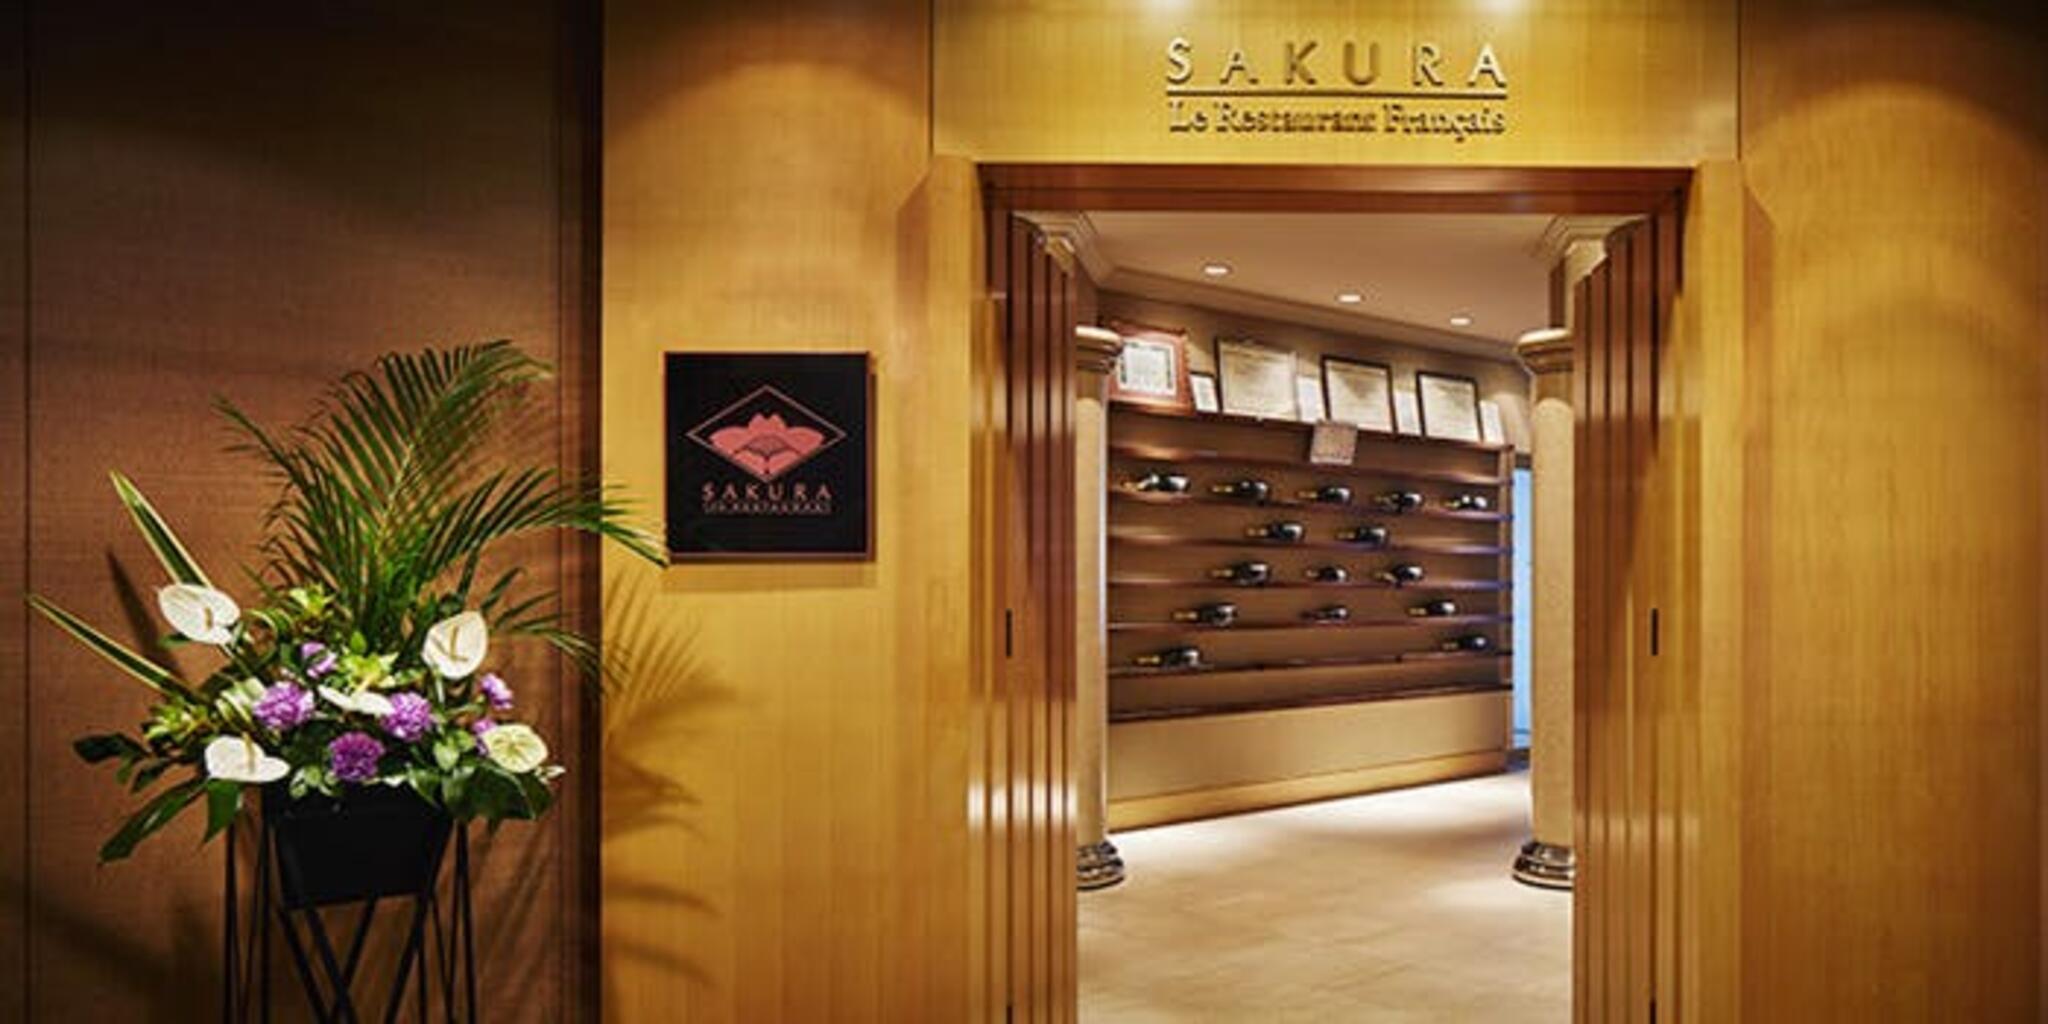 SAKURA ホテルニューオータニ大阪の代表写真2